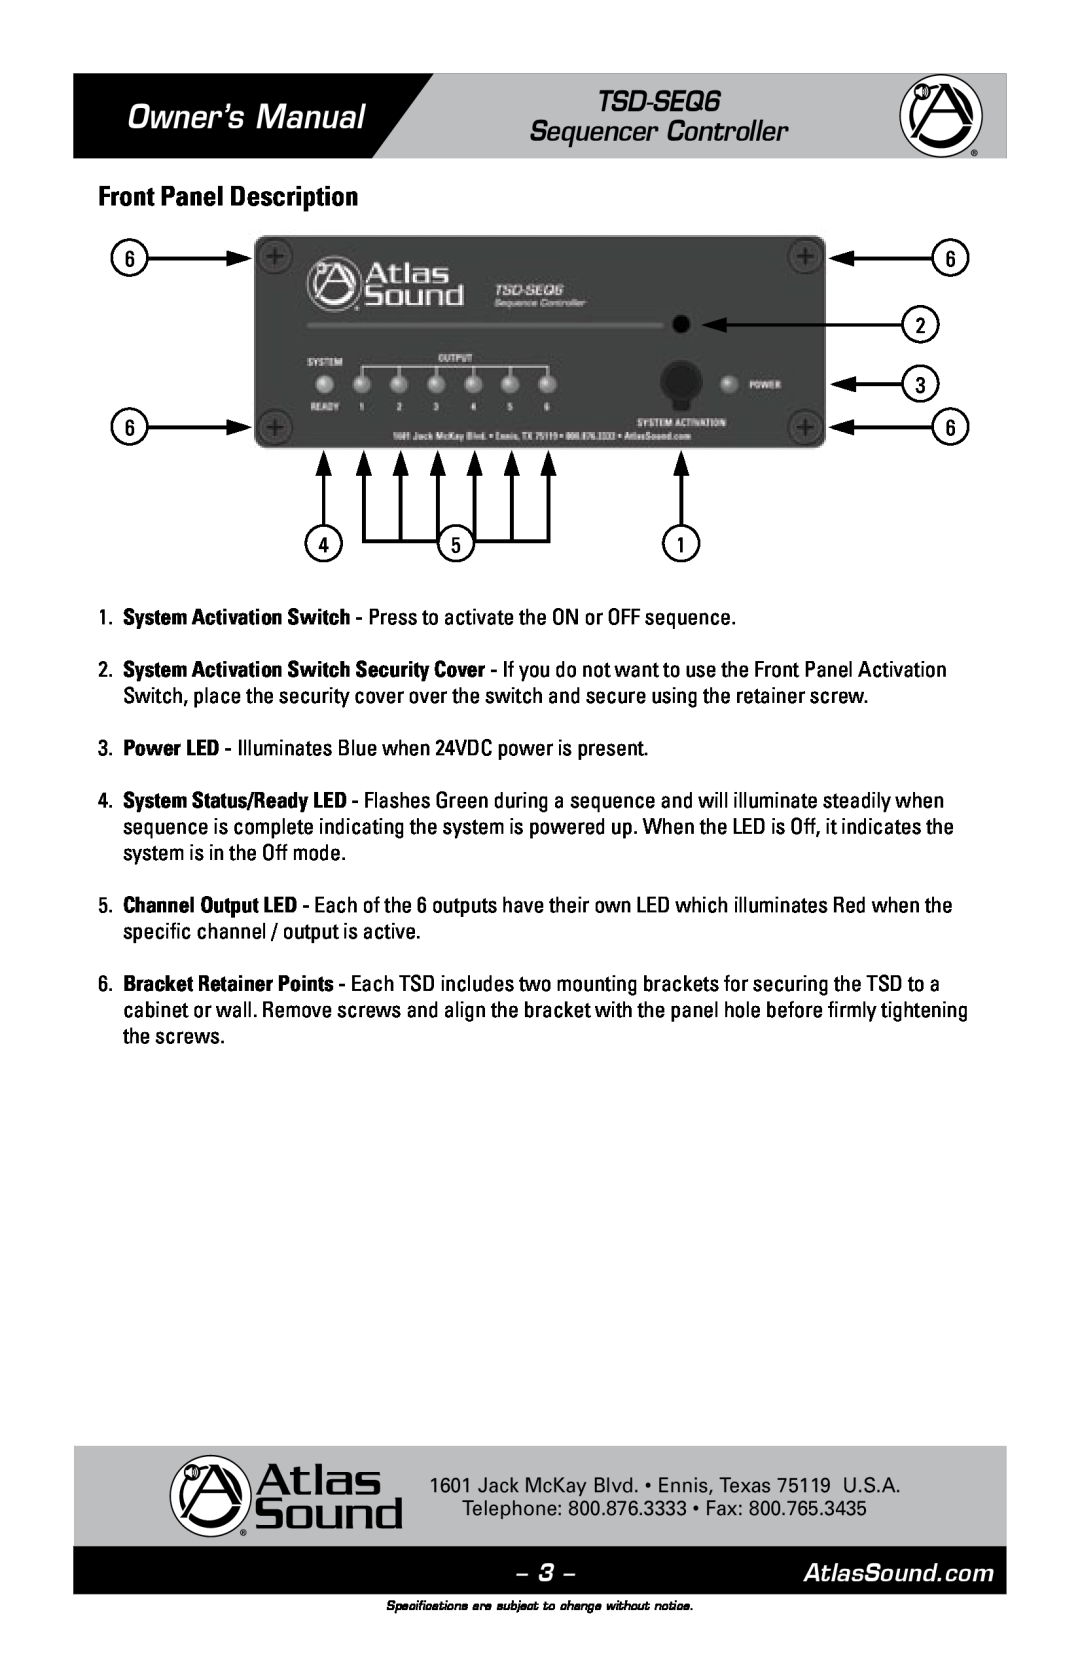 Atlas Sound owner manual Front Panel Description, Owner’s Manual, TSD-SEQ6 Sequencer Controller, AtlasSound.com 